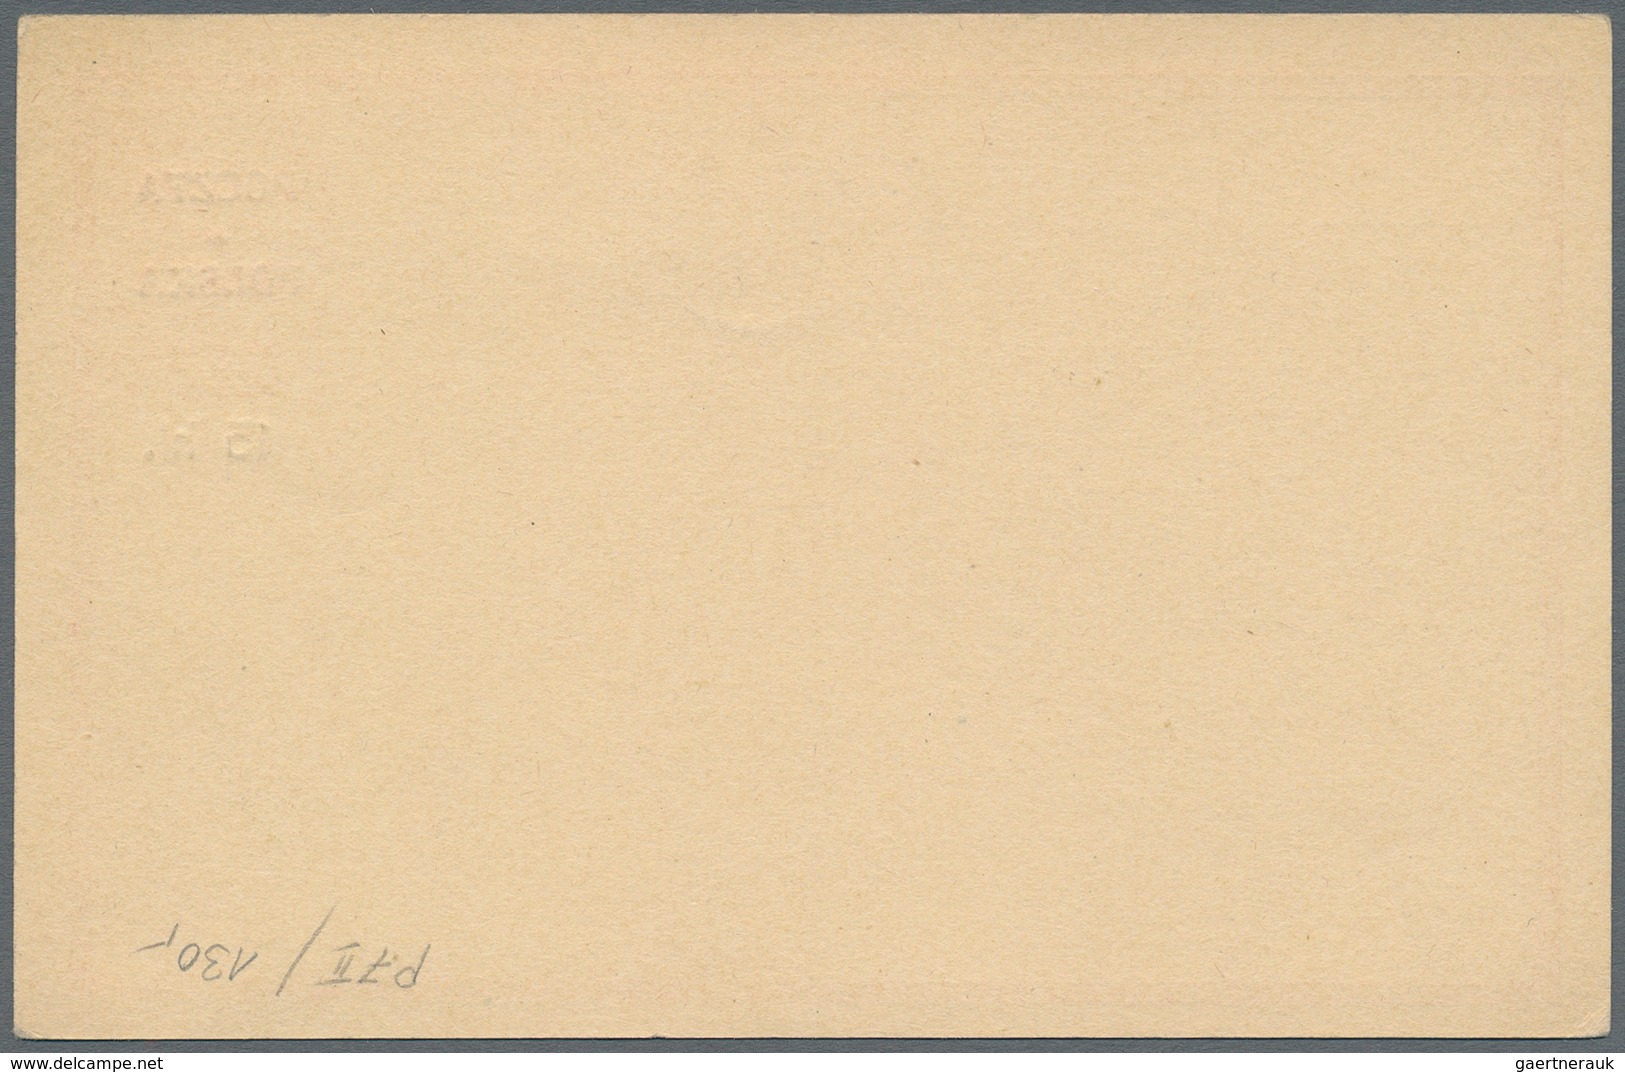 Polen - Ganzsachen: 1919 Unused Postal Stationery Card, Original Card Of Austria P 217 With Overprin - Stamped Stationery